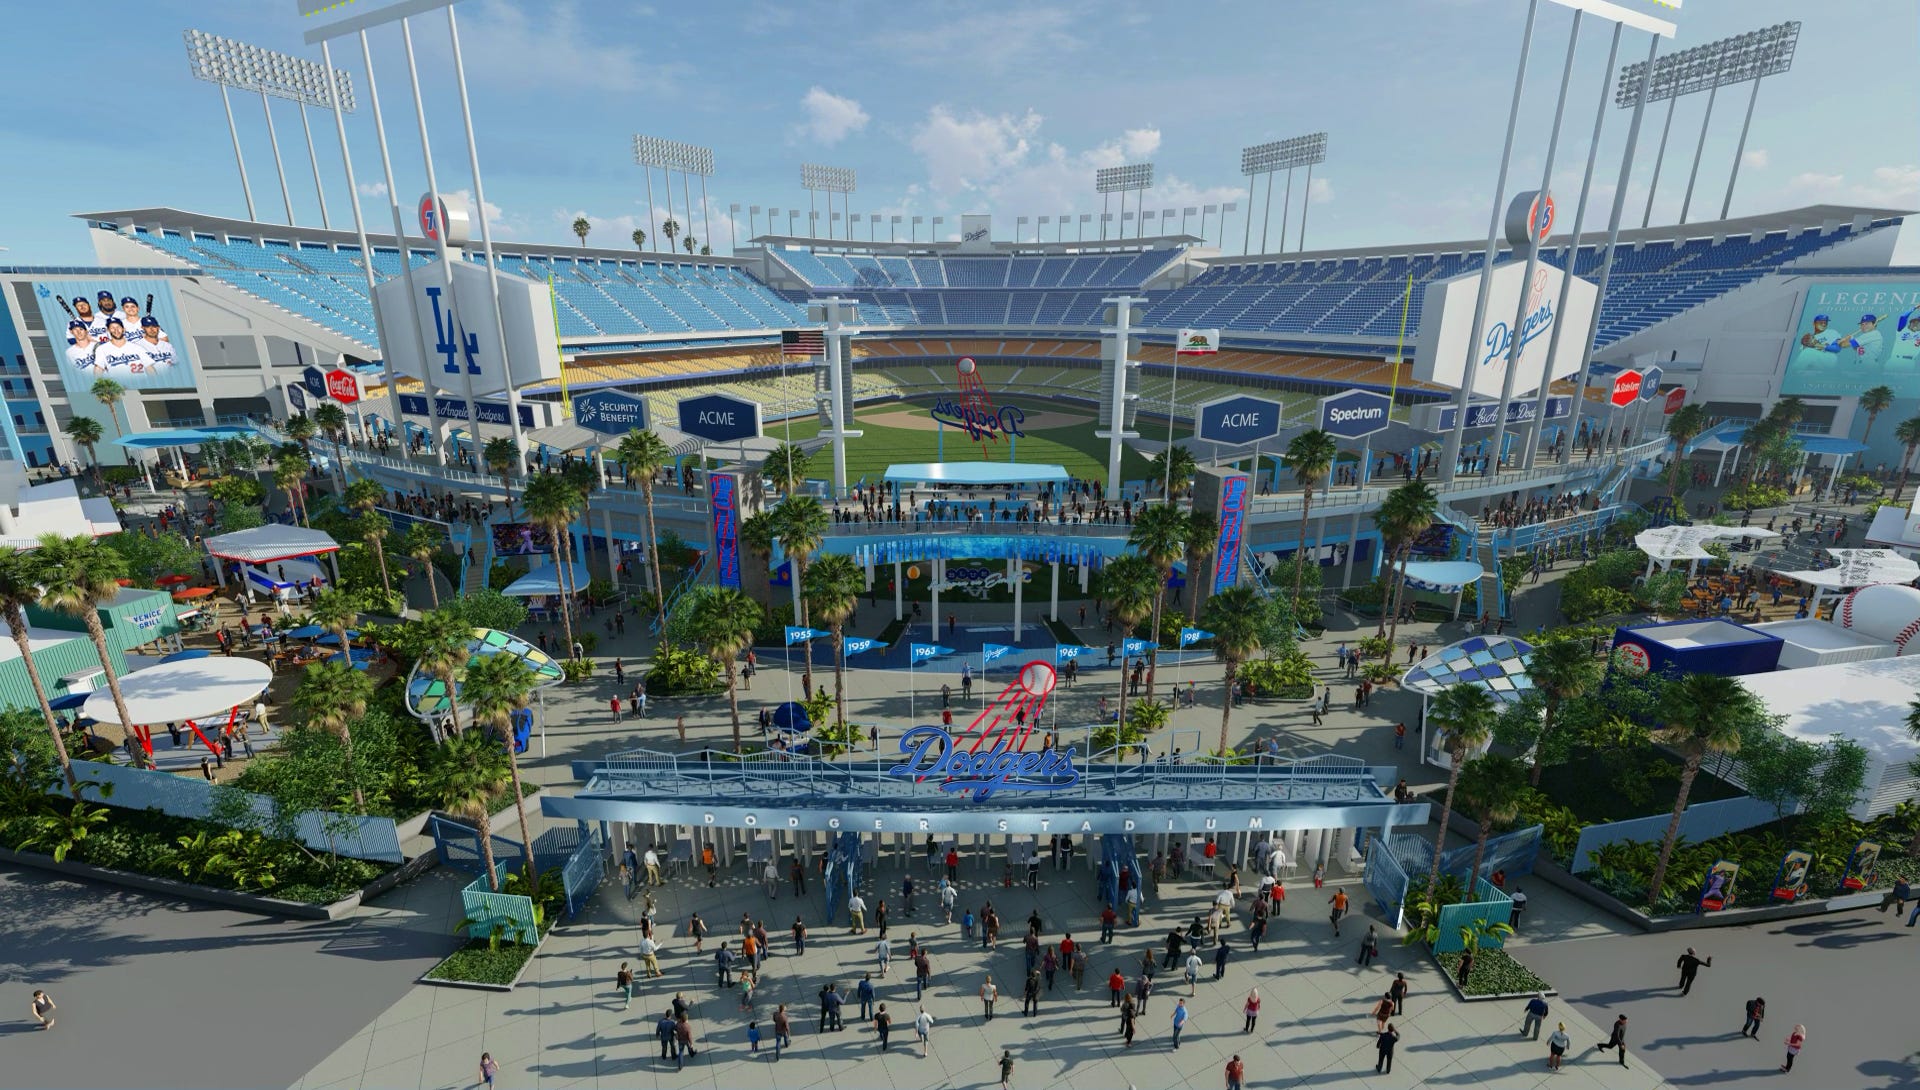 Dodgers showcase new center field plaza, pavilion renovations, by Rowan  Kavner